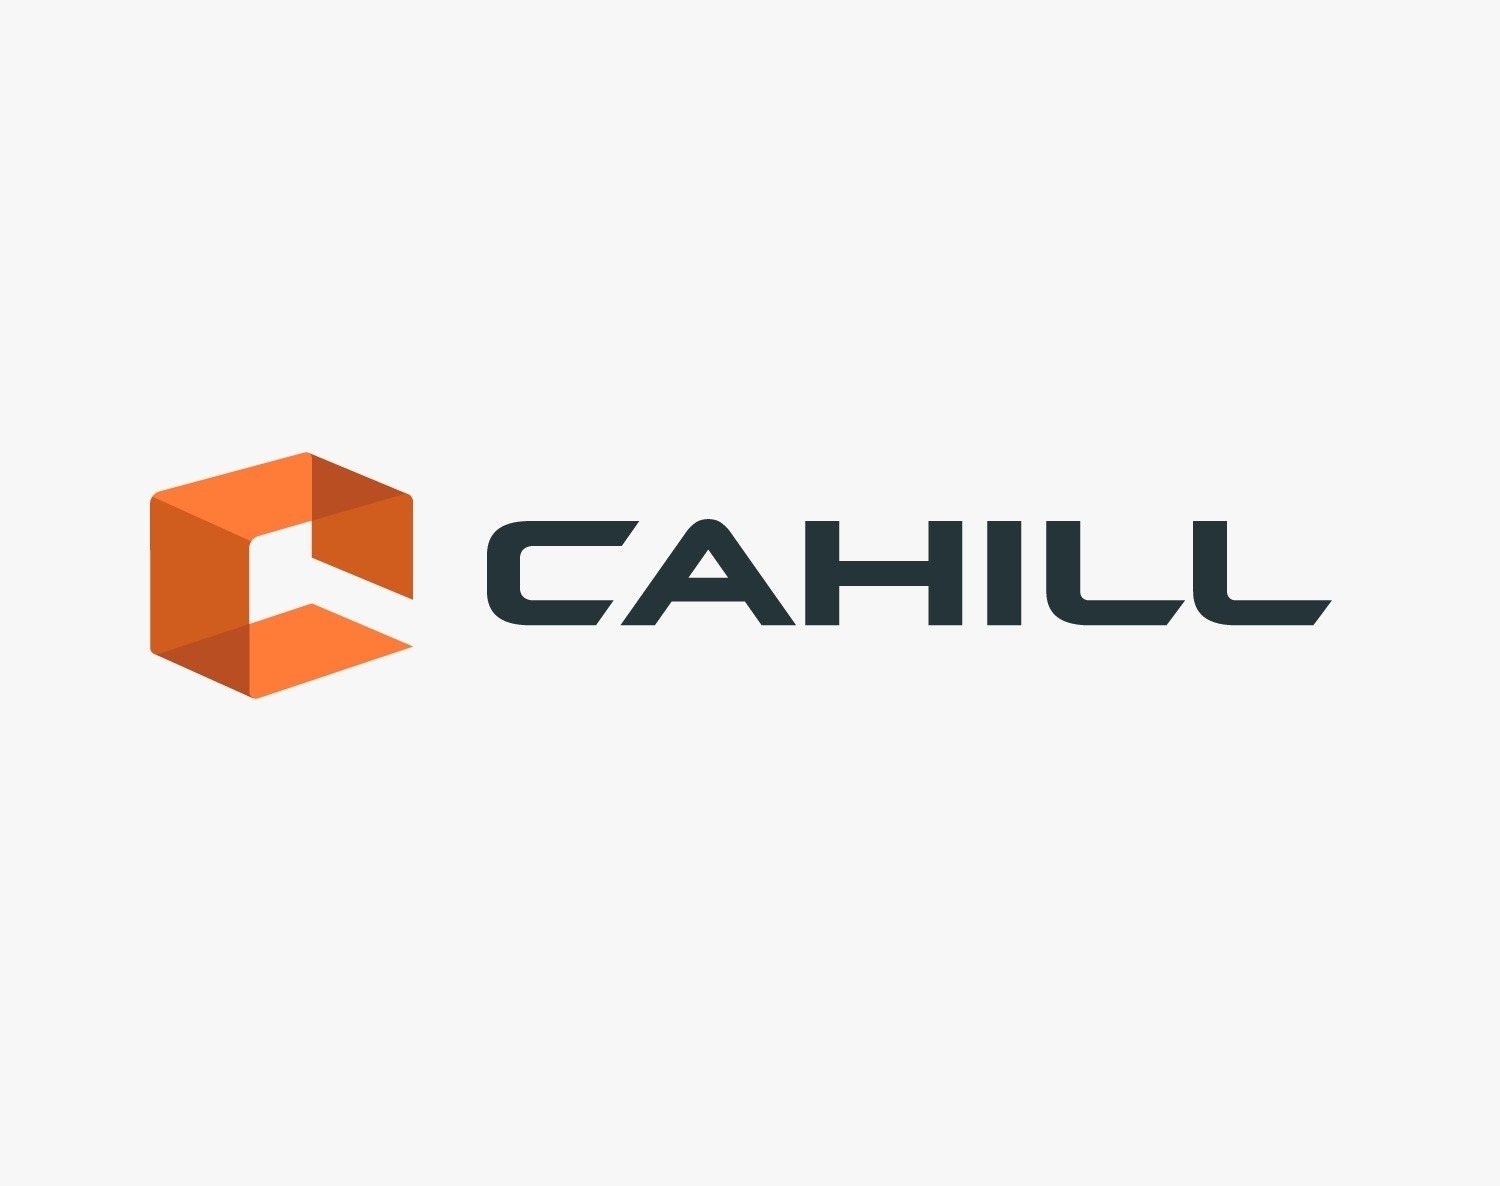 Cahill branding